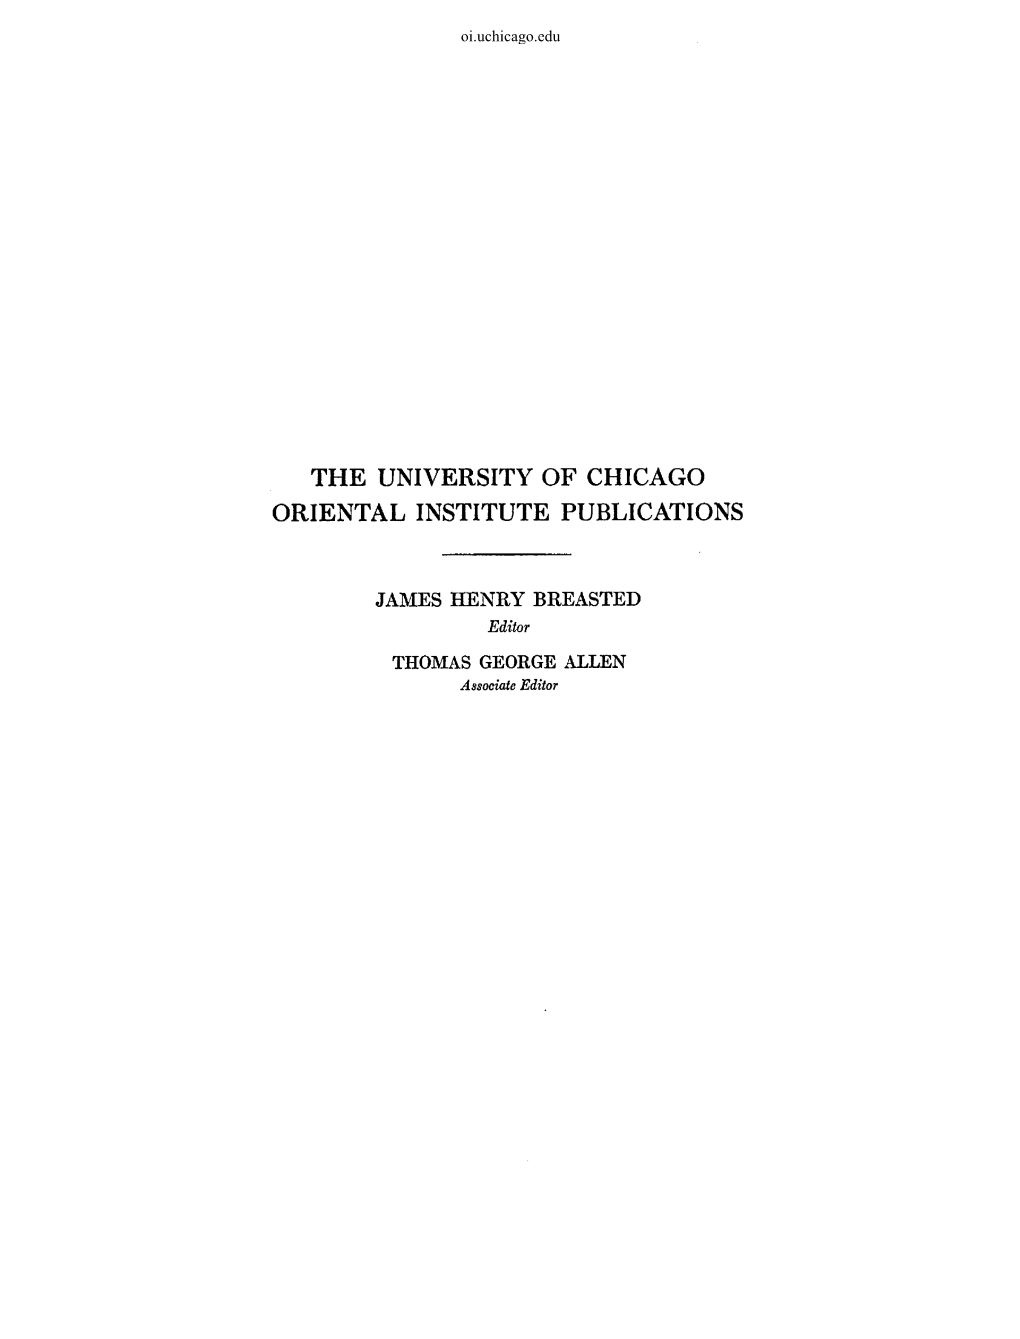 The University of Chicago Oriental Institute Publications